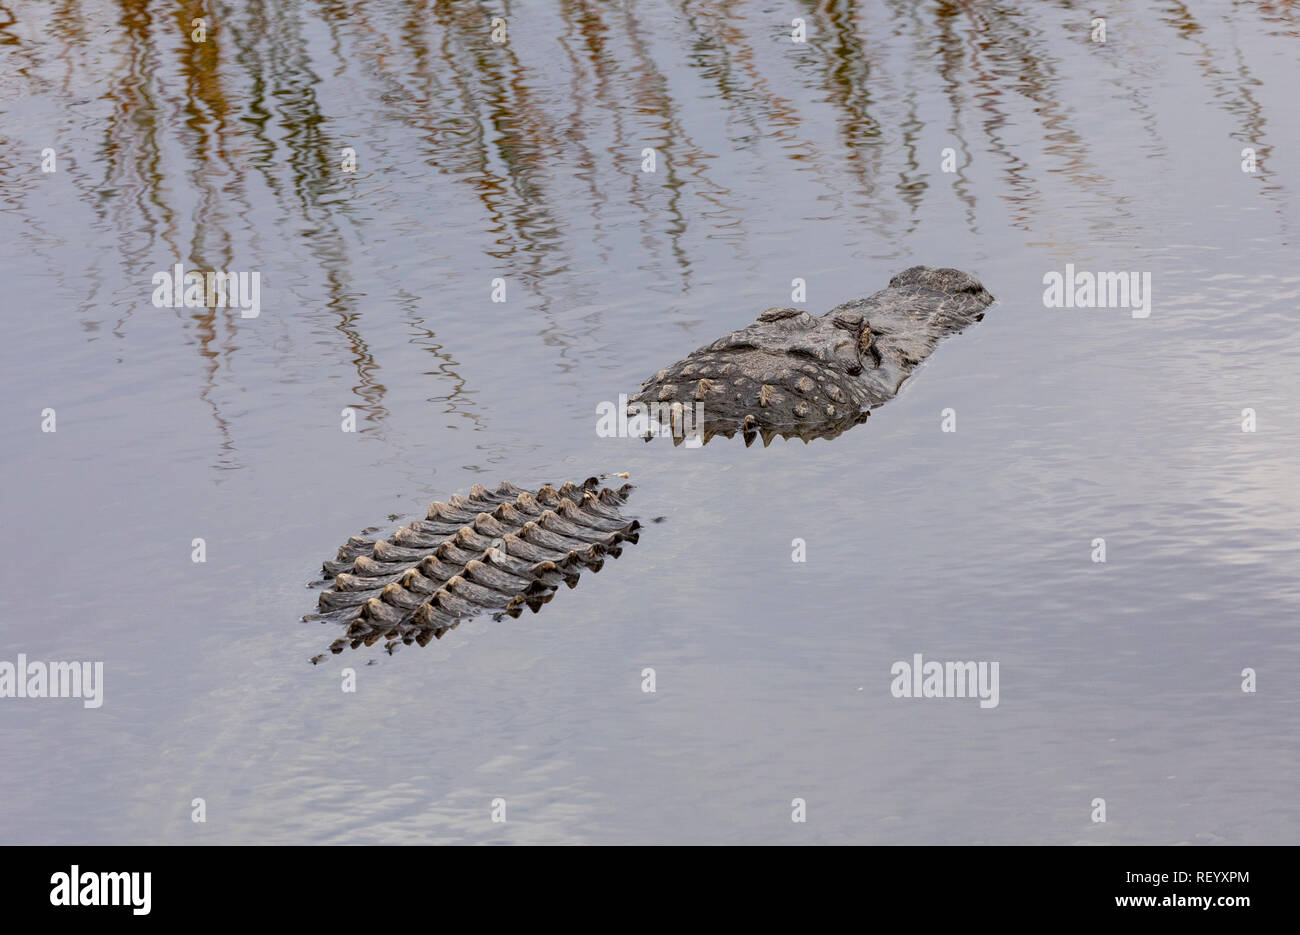 Common alligator, Alligator mississippiensis, partially submerged in coastal lagoon, Texas. Stock Photo